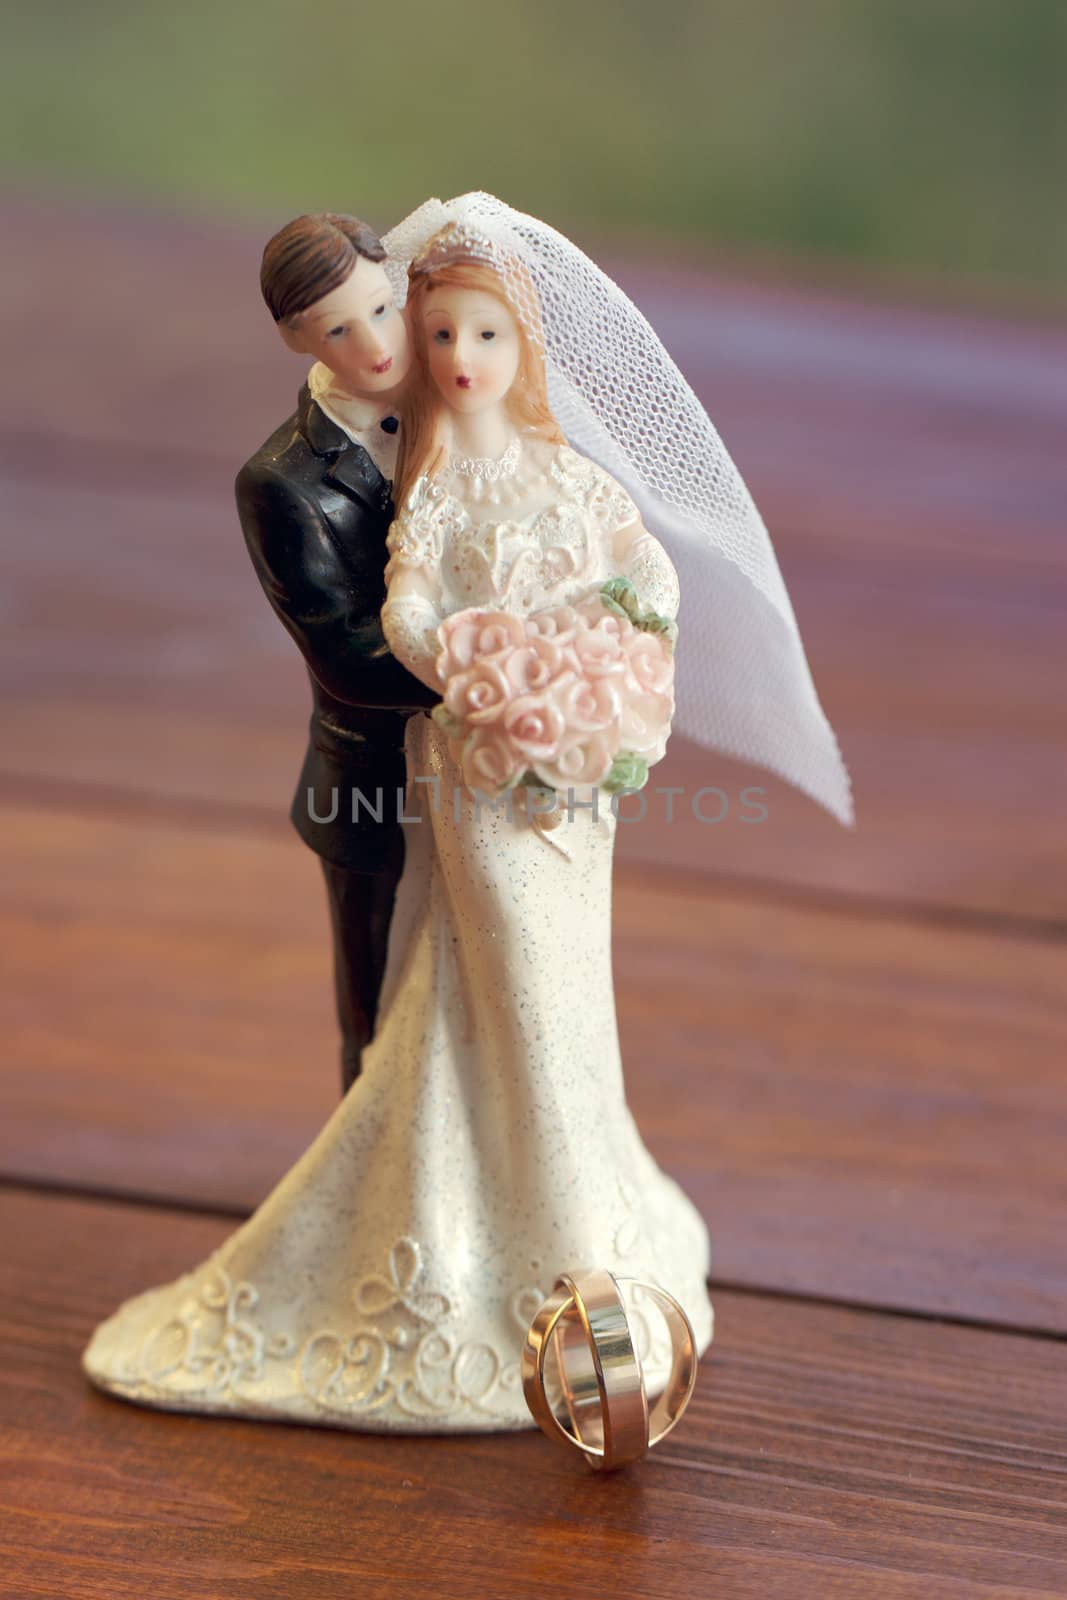 Bride and groom figurines by victosha